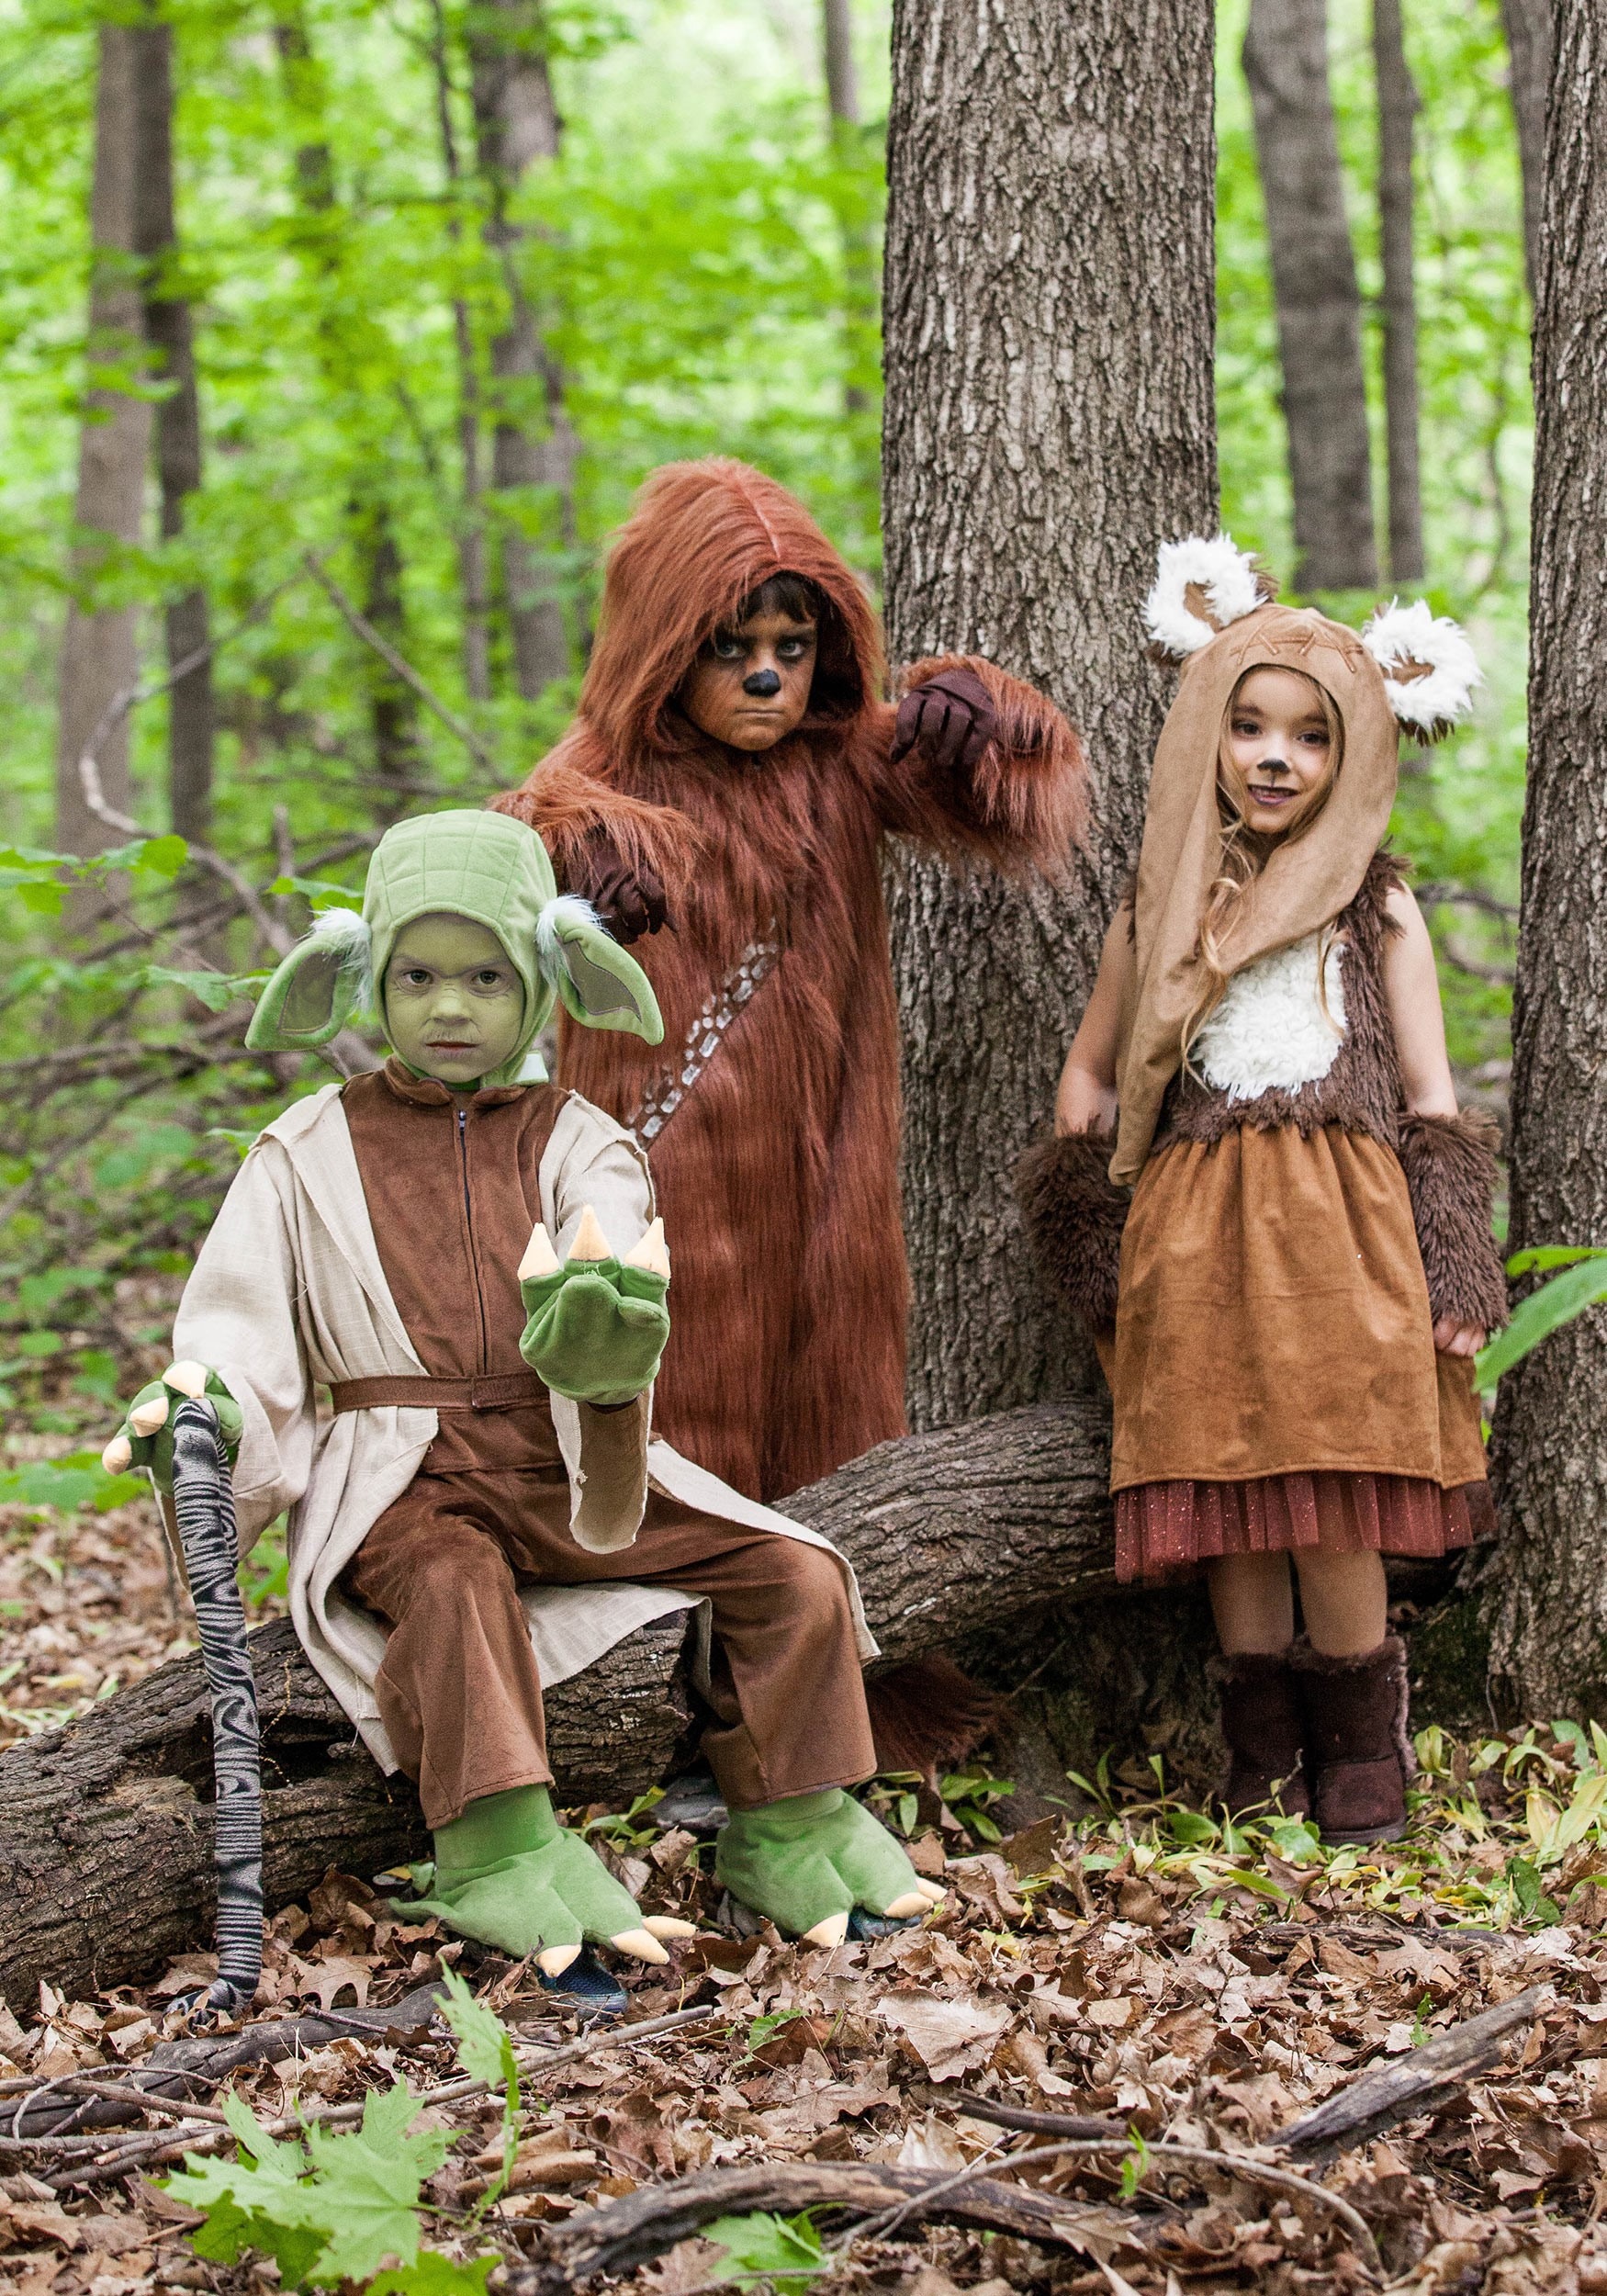 Kid's Star Wars Yoda Costume